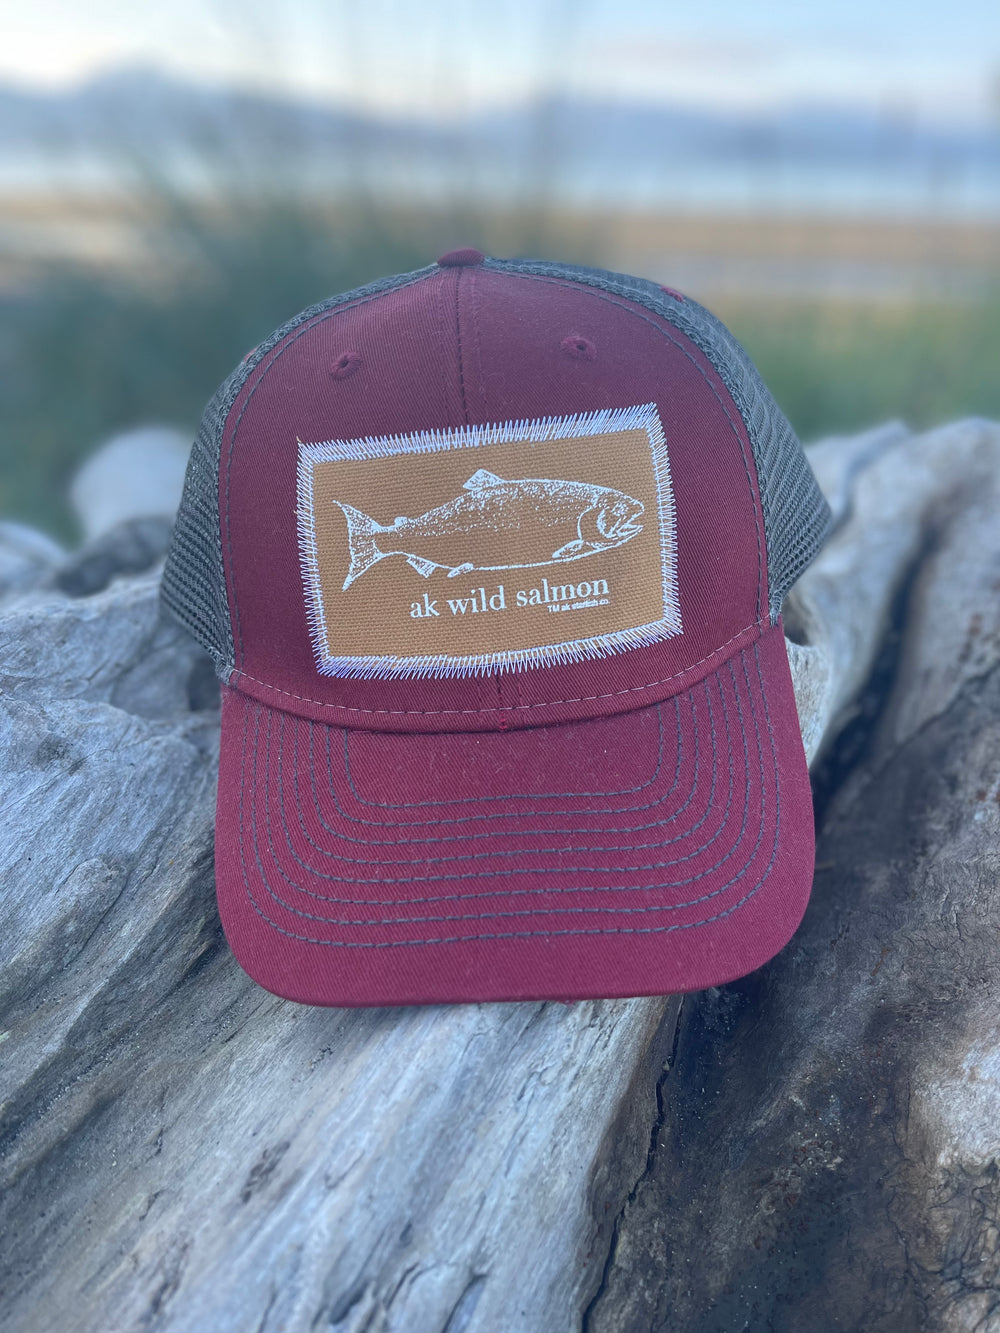 Autumn / Slate AK Wild Salmon Patch Hat. $38.00